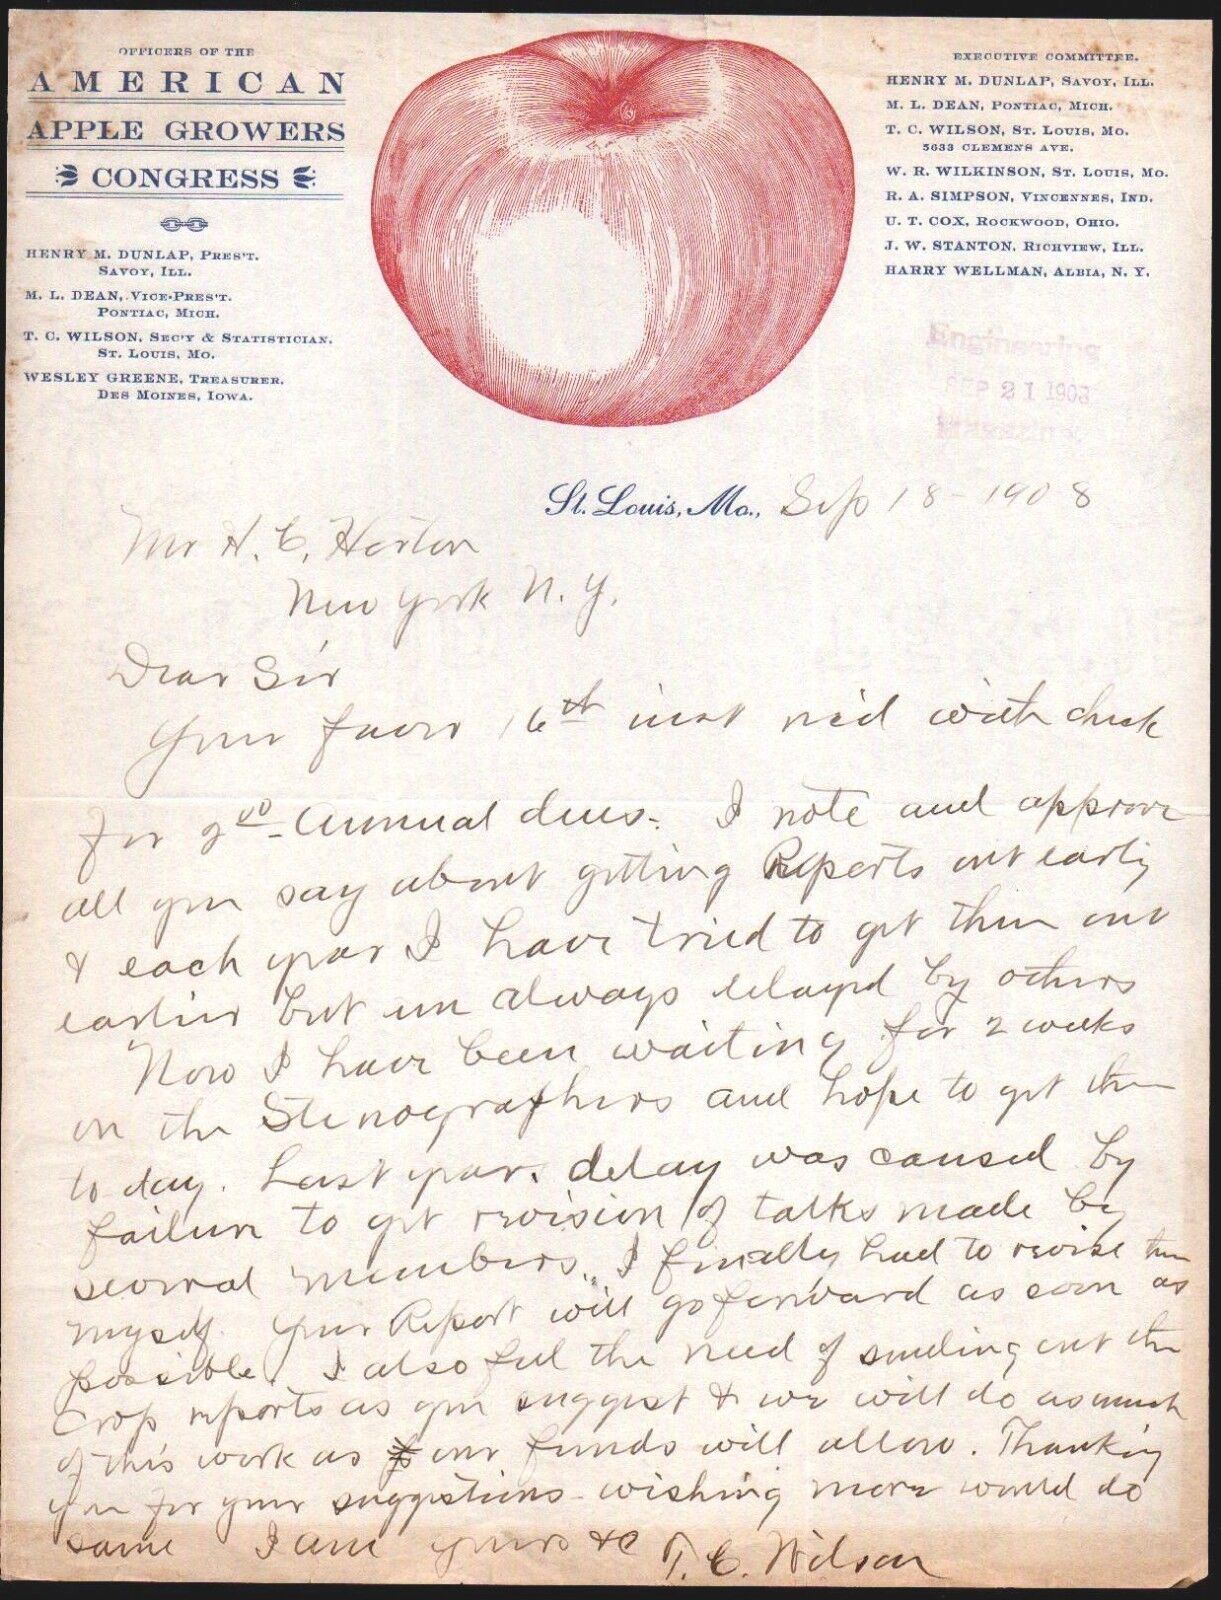 1908 St Louis Mo - American Apple Growers Congress - Henry M Dunlap Letter Head